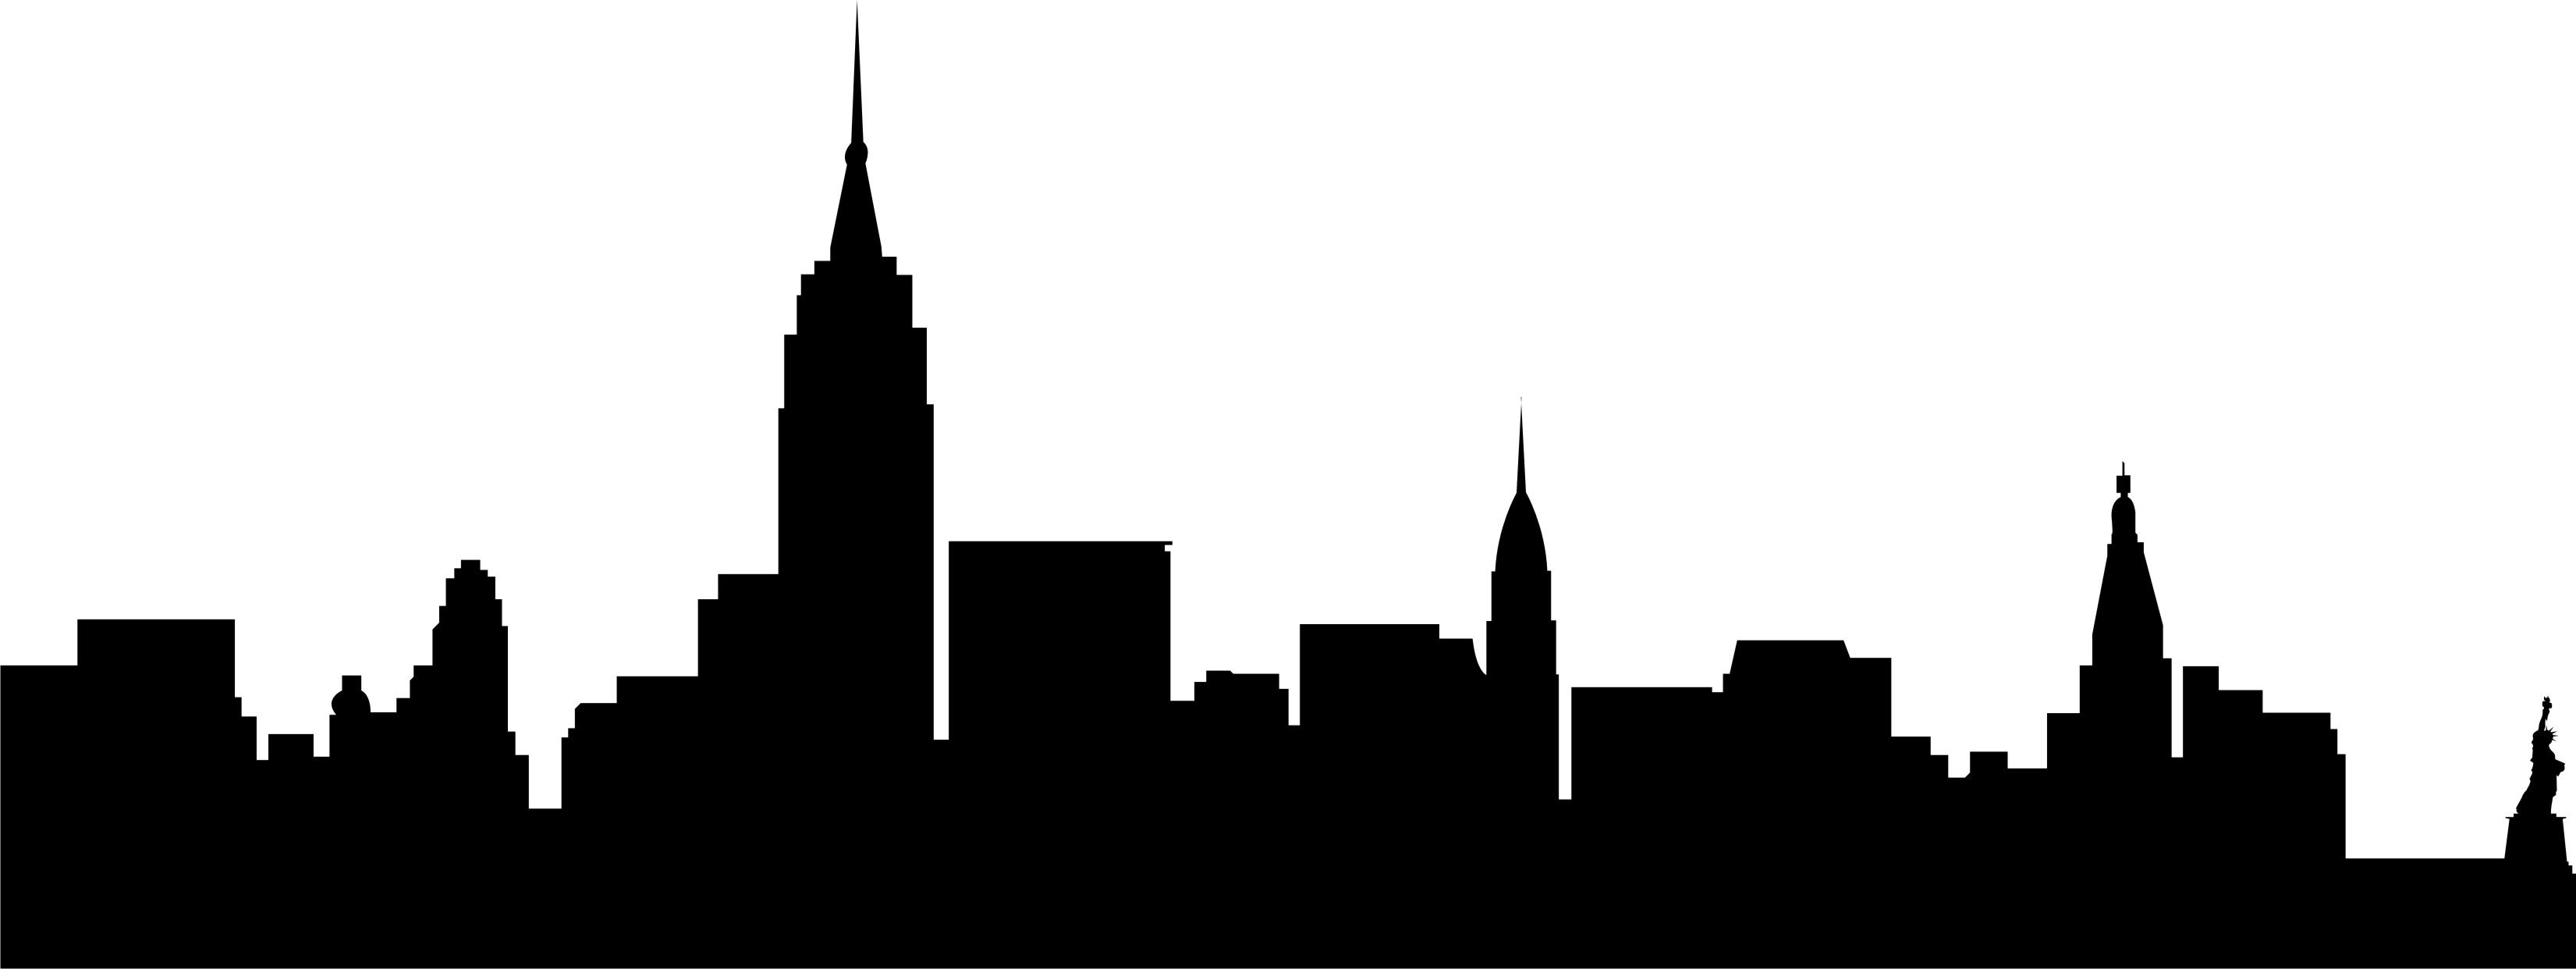 Skyline silhouette free download. Black clipart cityscape